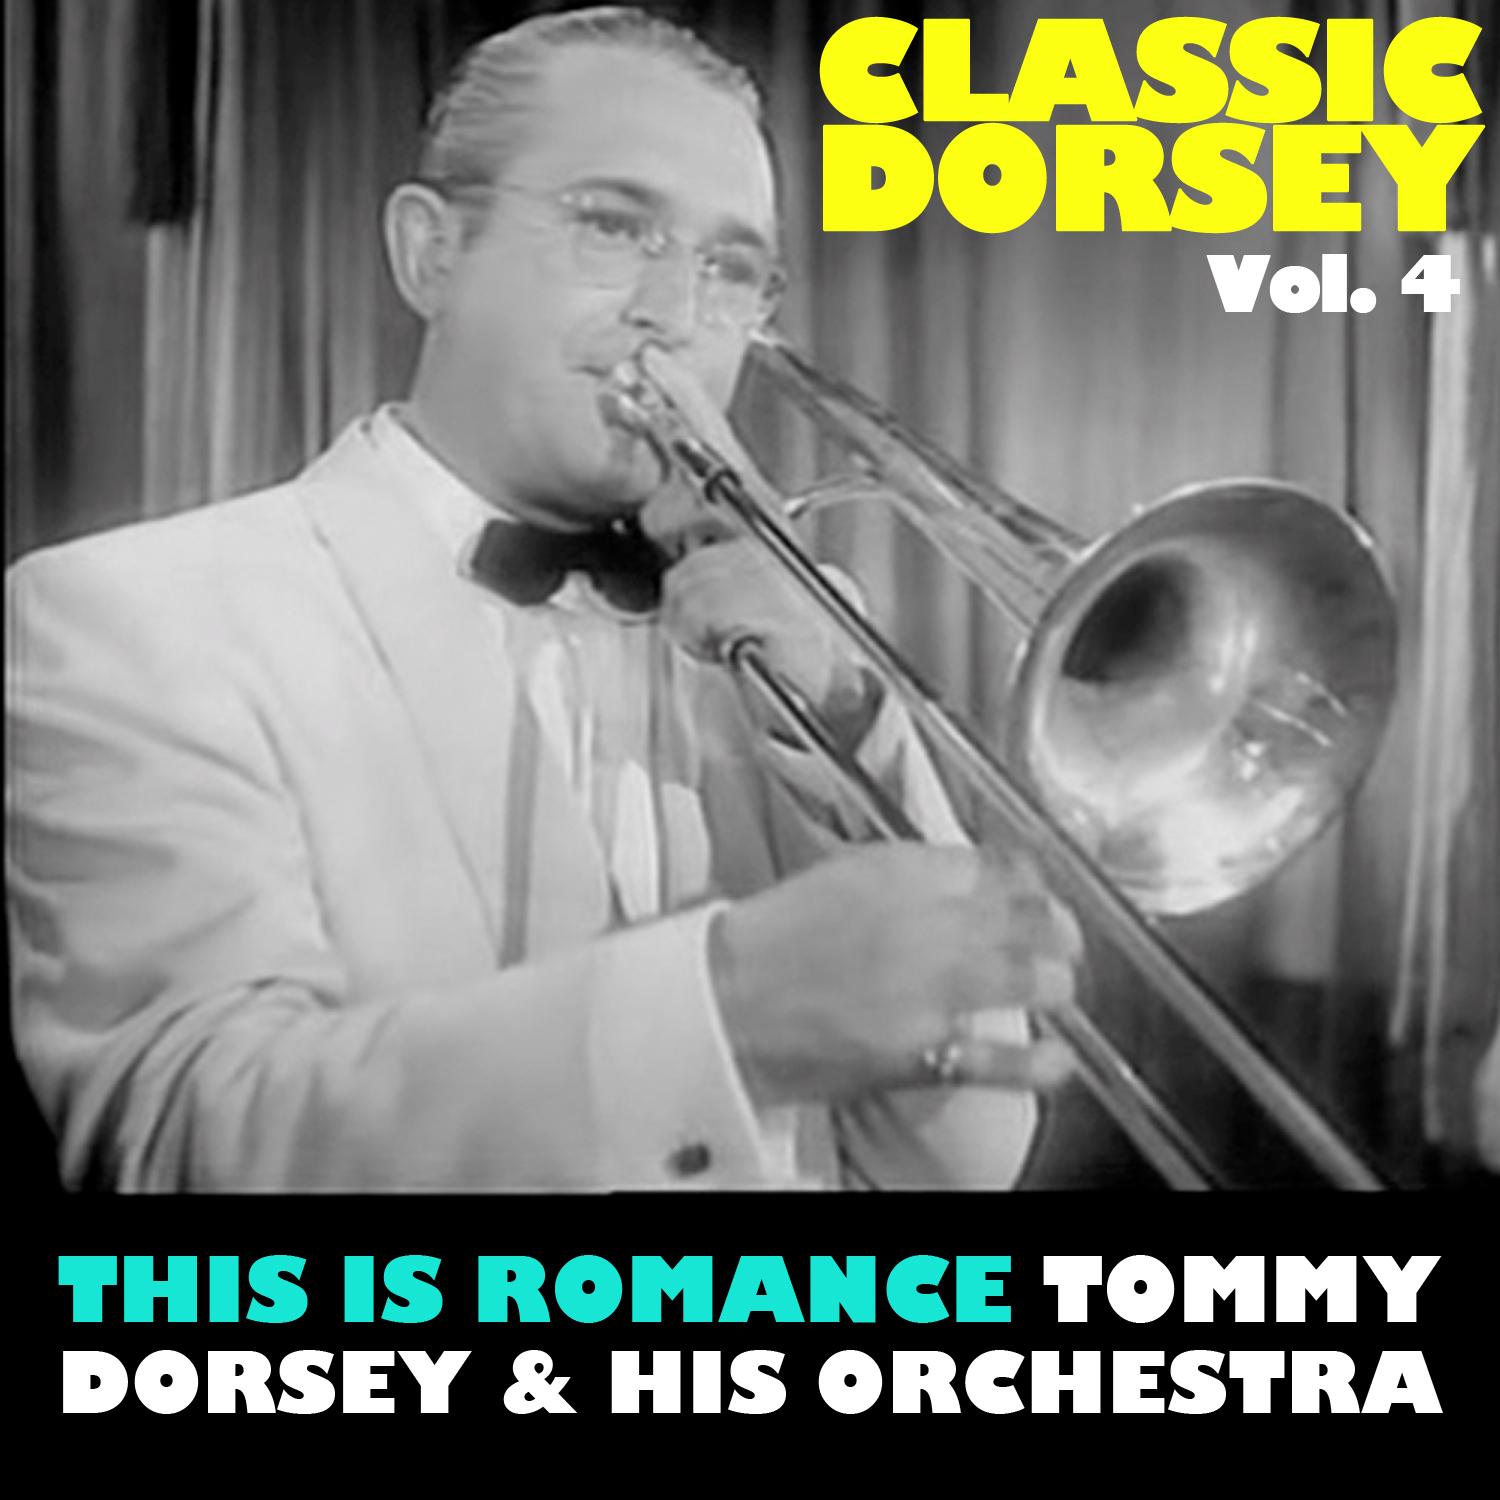 Classic Dorsey, Vol. 4: This Is Romance